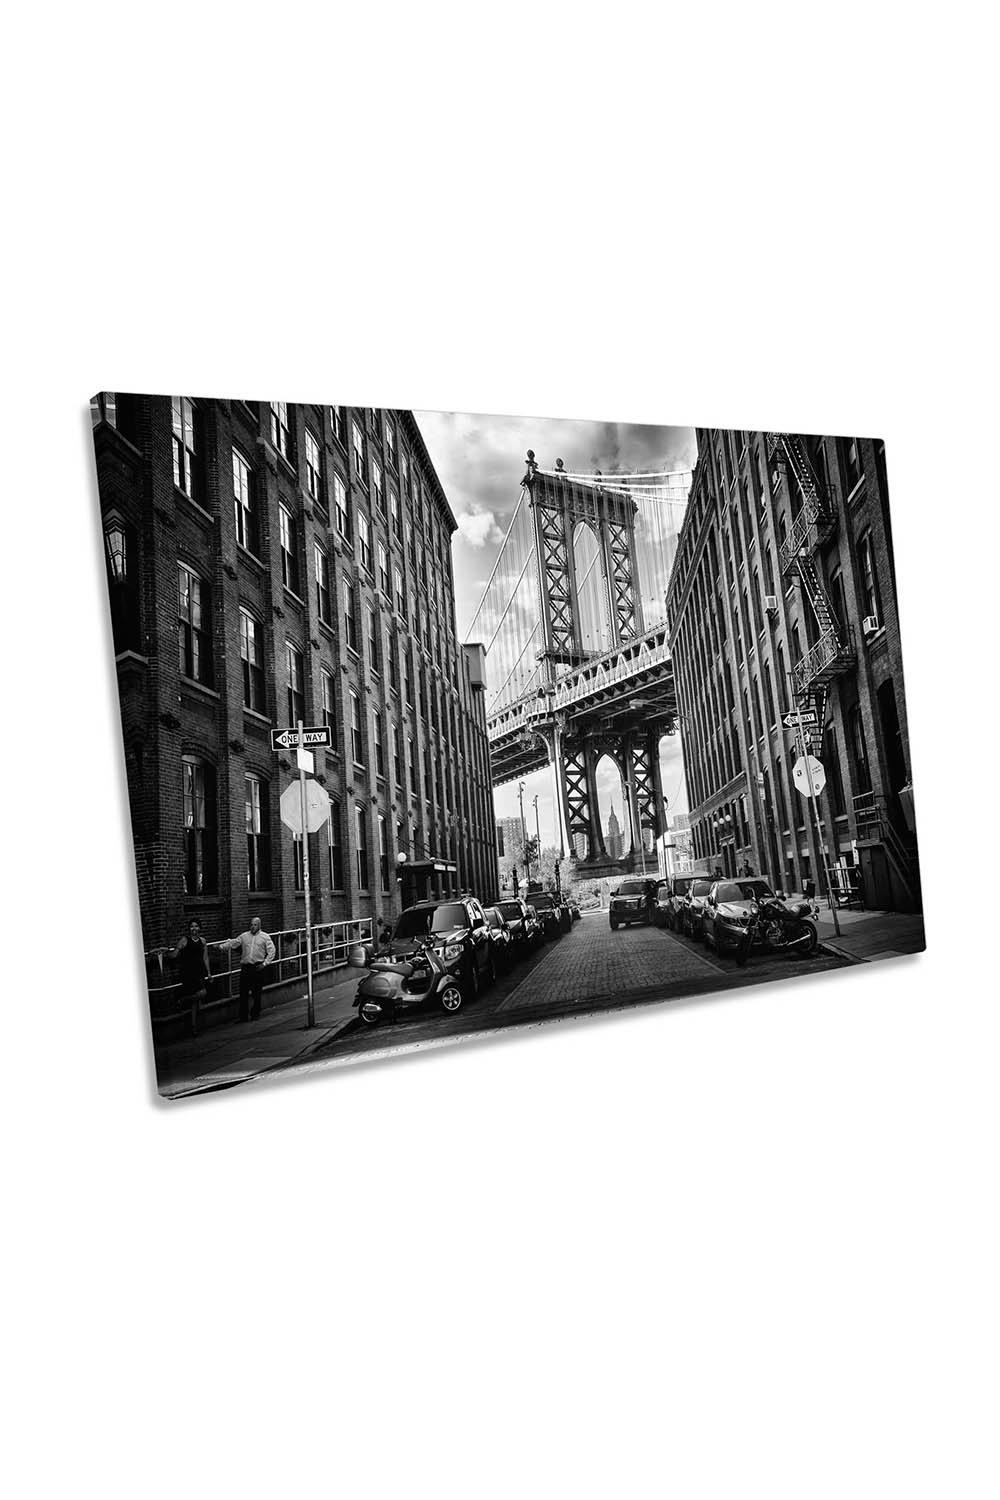 In America New York City Brooklyn Bridge Canvas Wall Art Picture Print